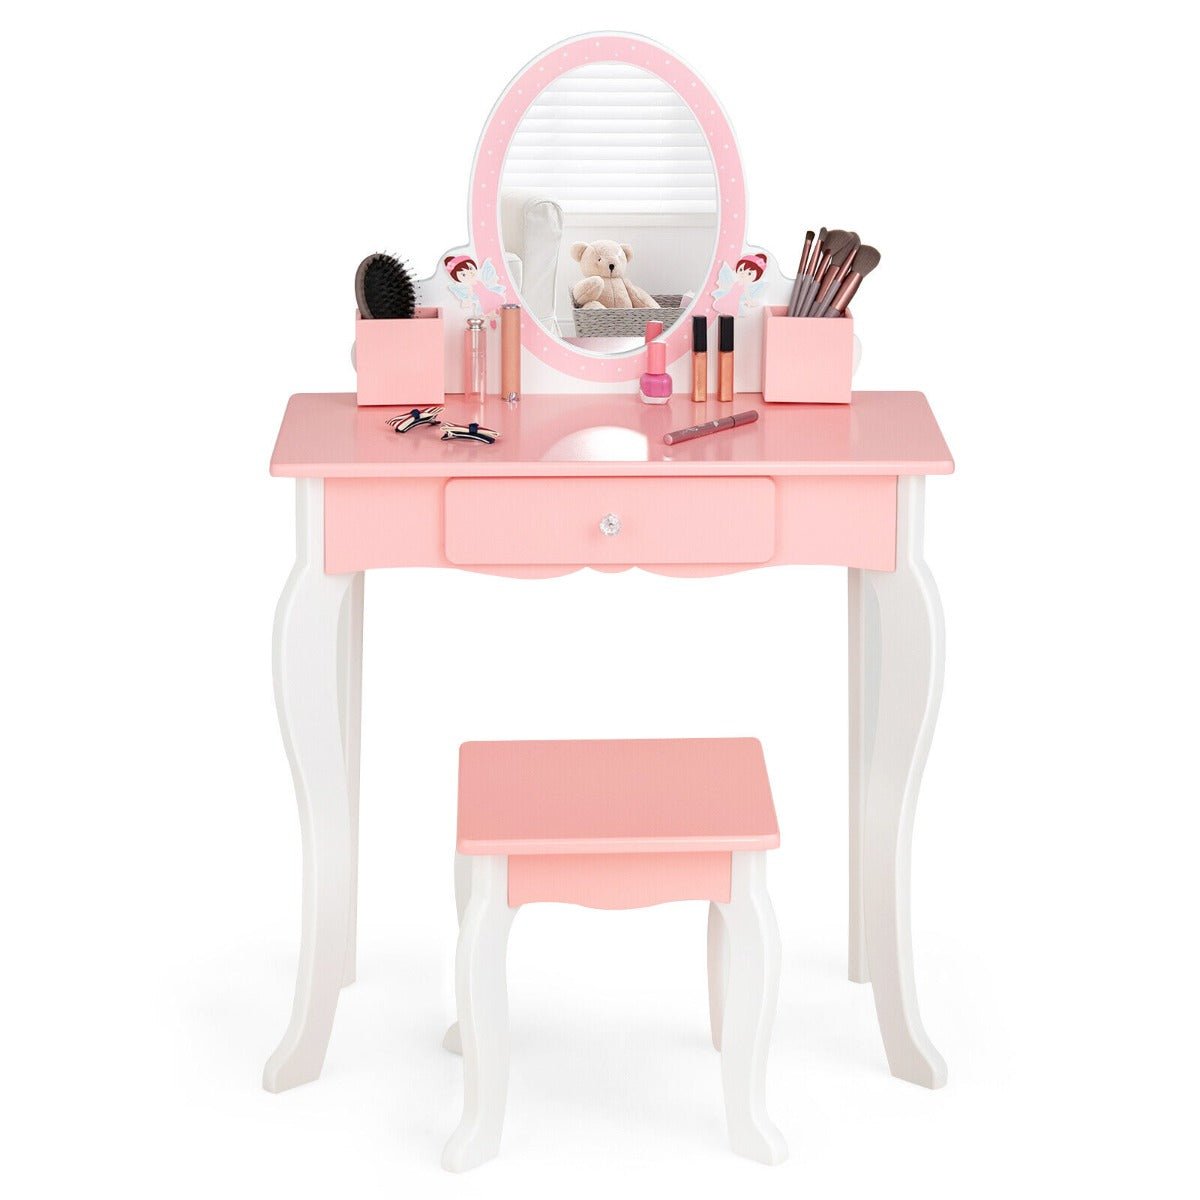 Pink Princess Vanity Table for Kids